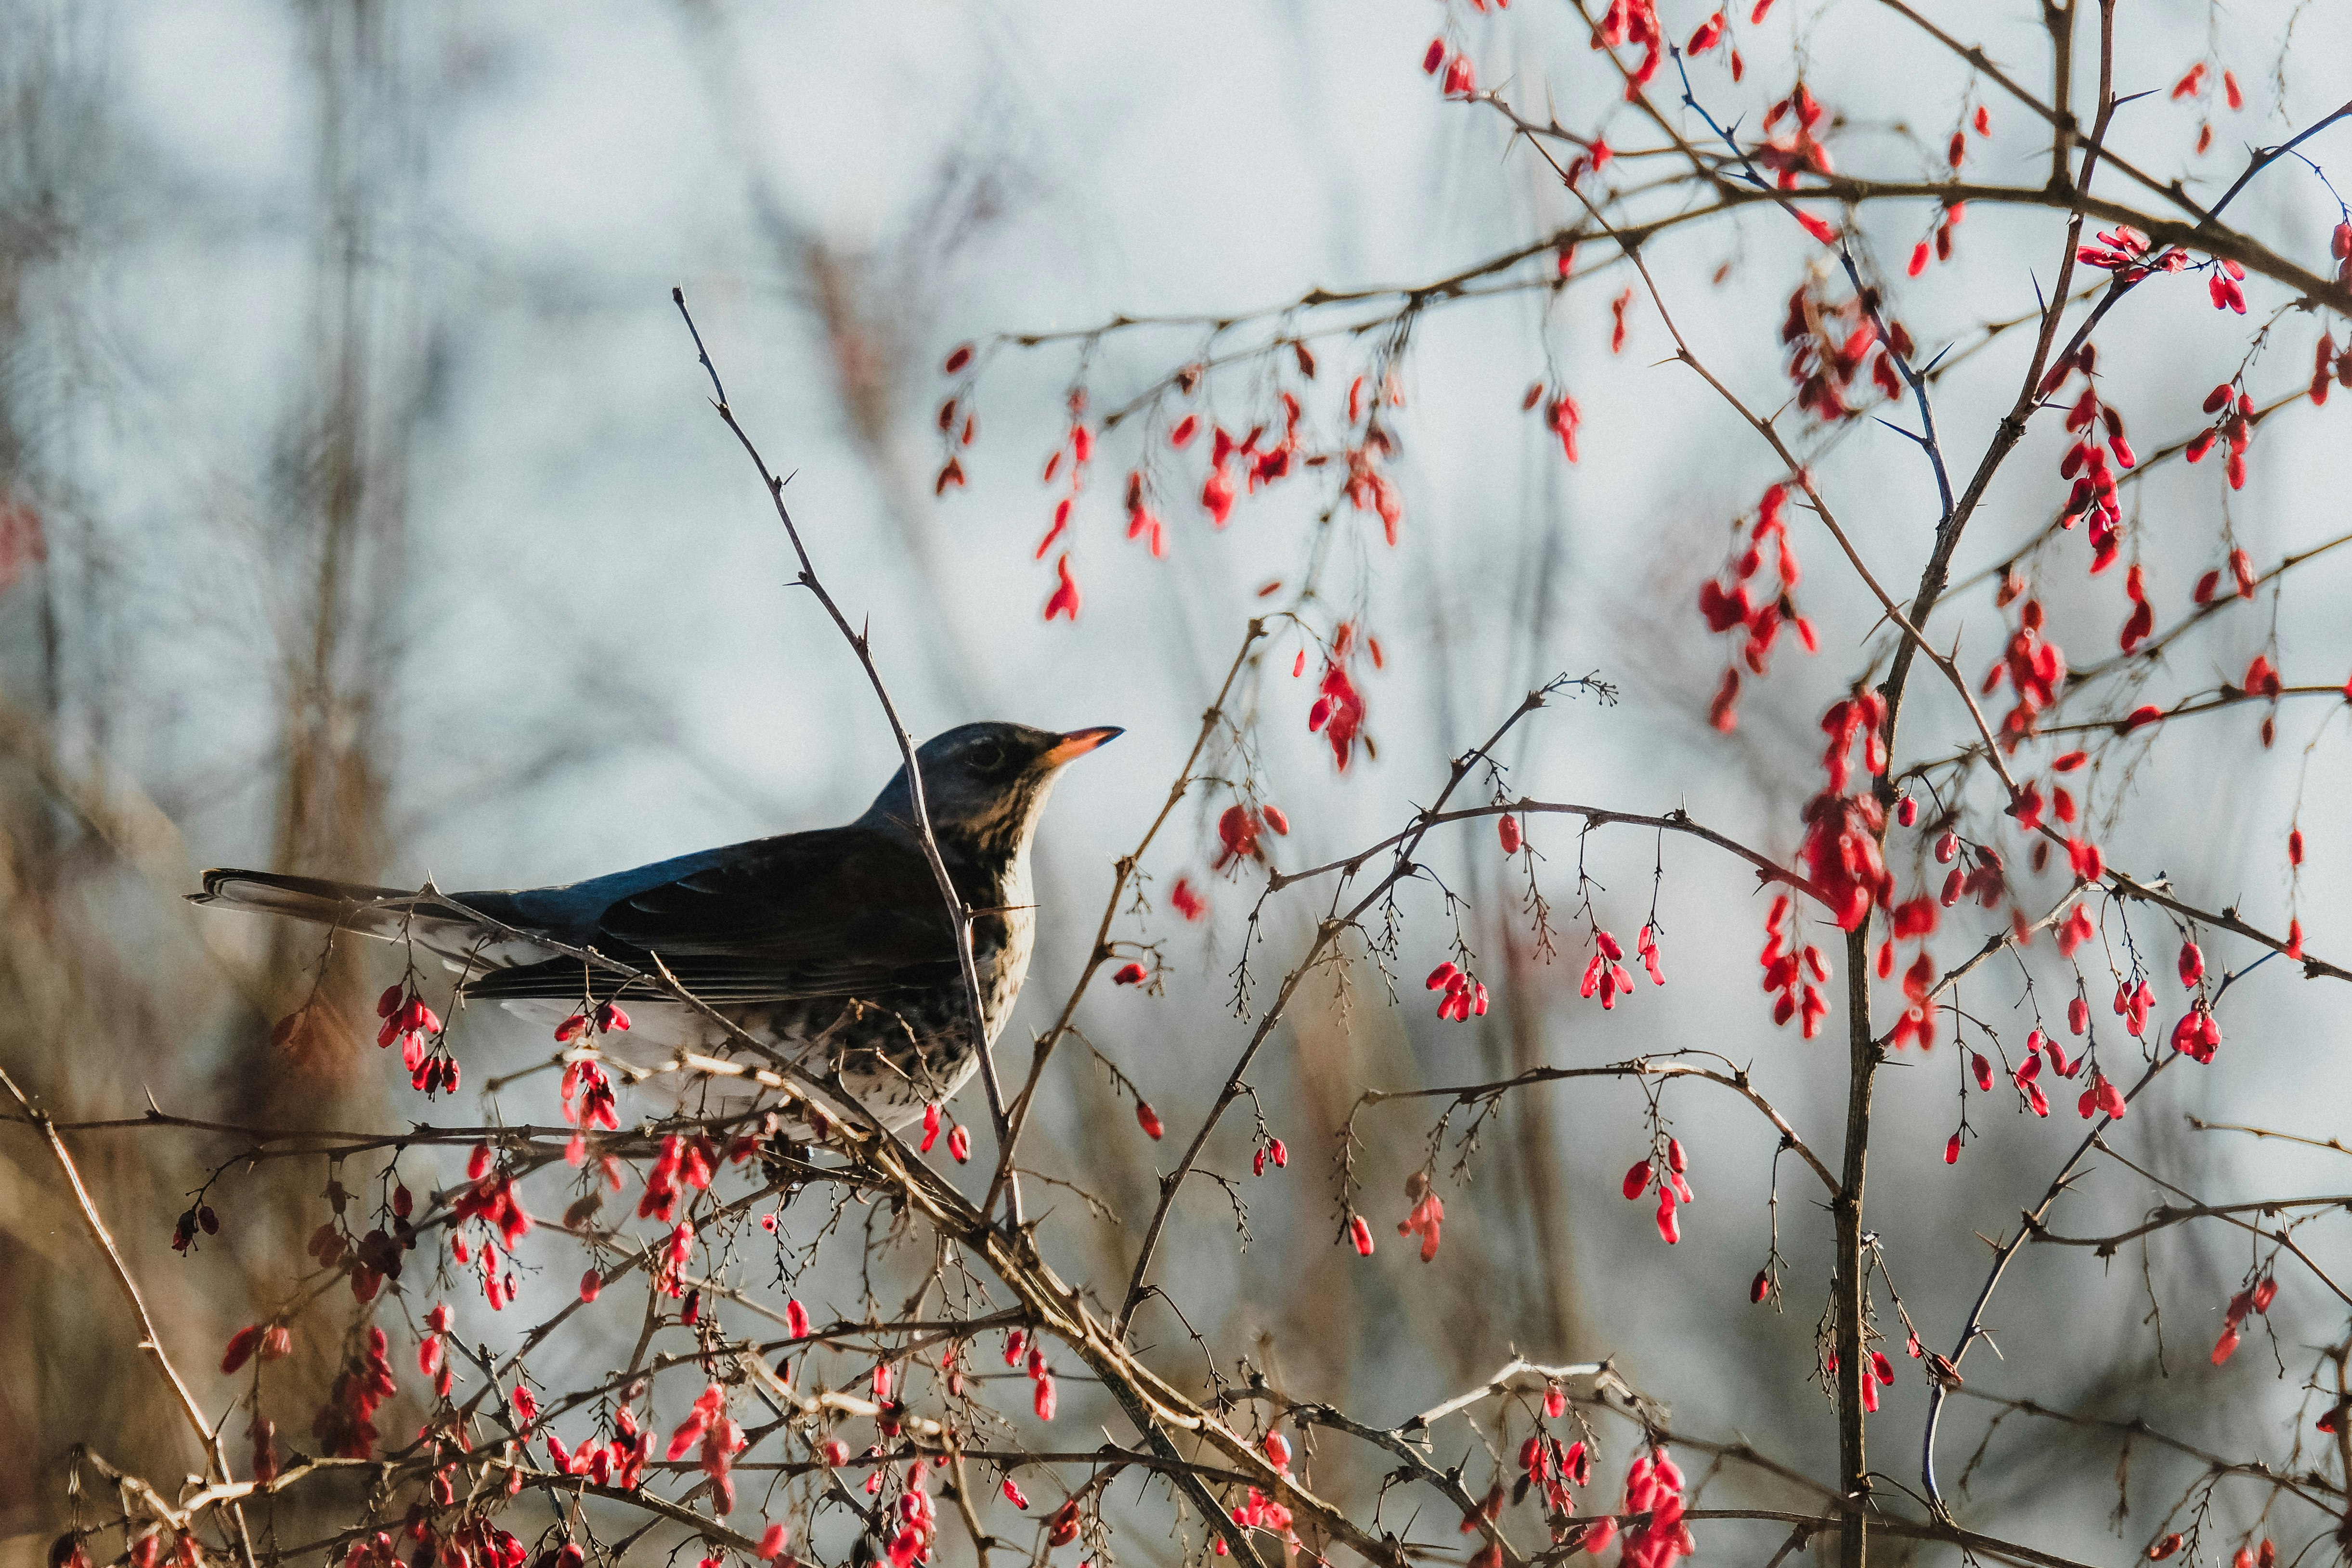 black bird on brown tree branch